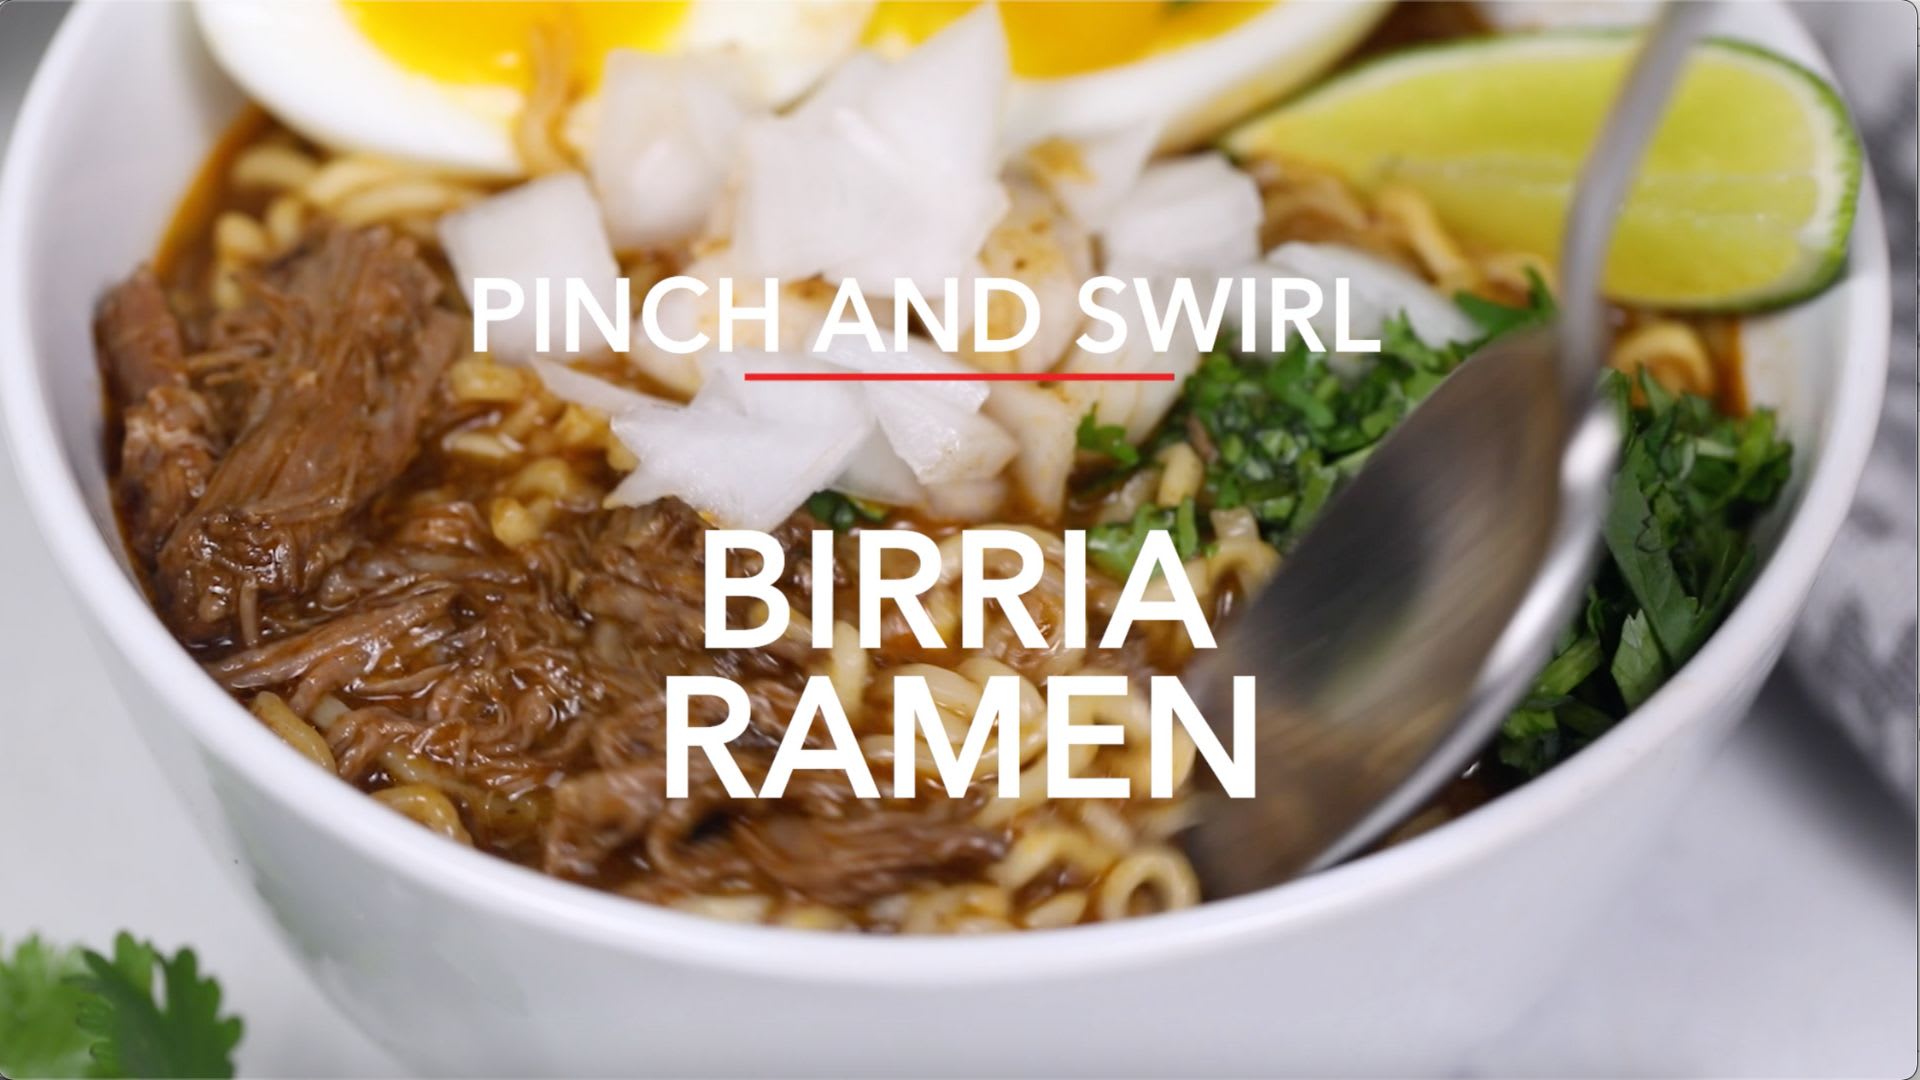 Birria Ramen - Pinch and Swirl